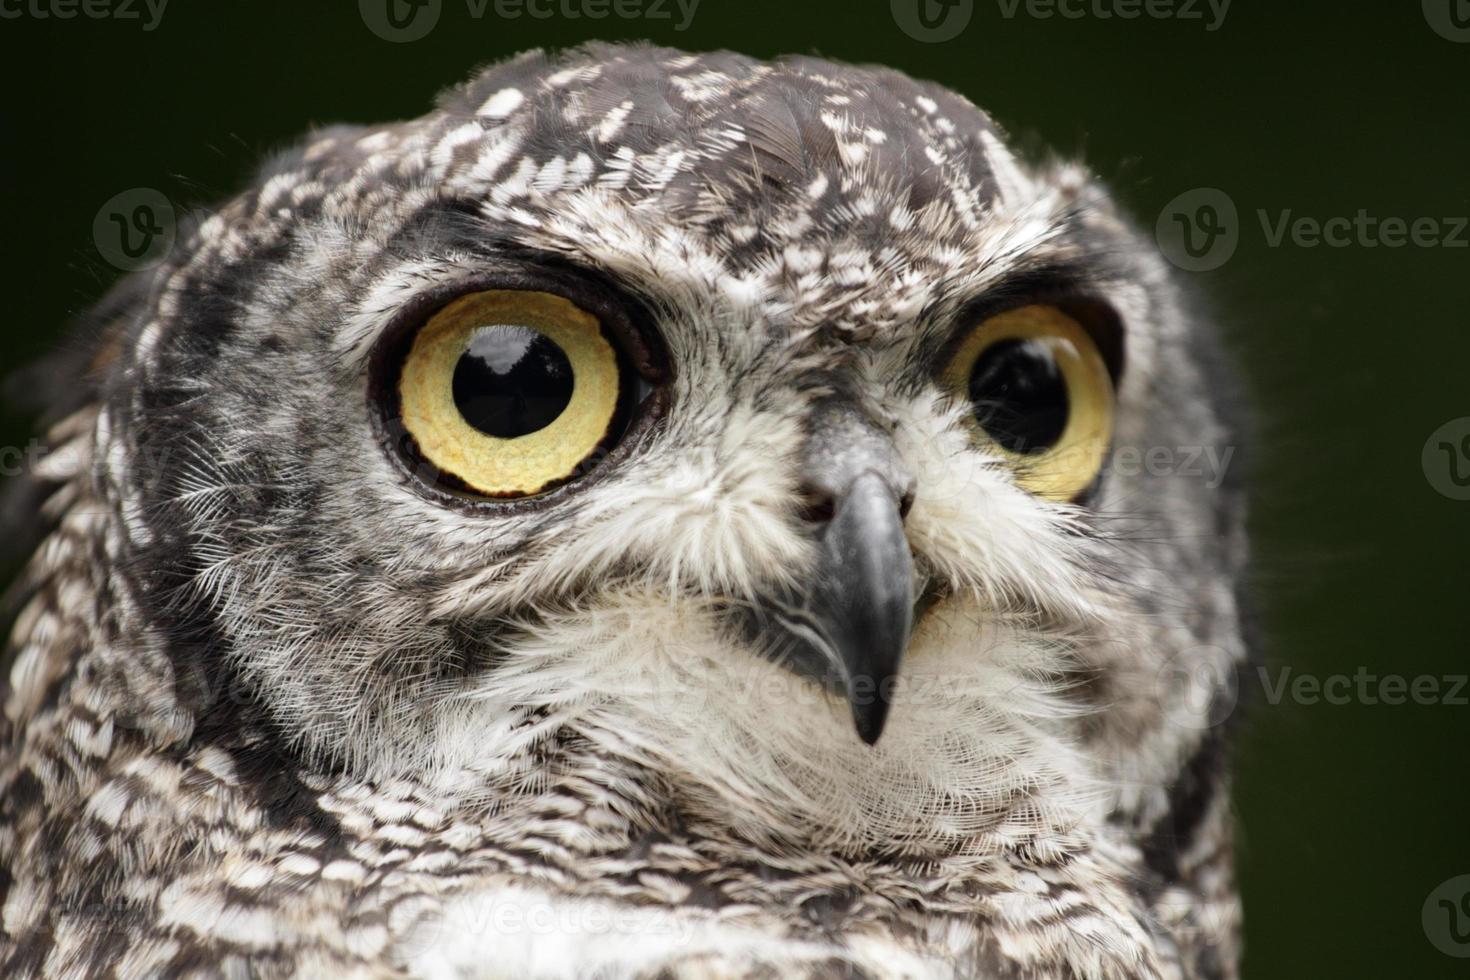 Spotted Eagle Owl. photo